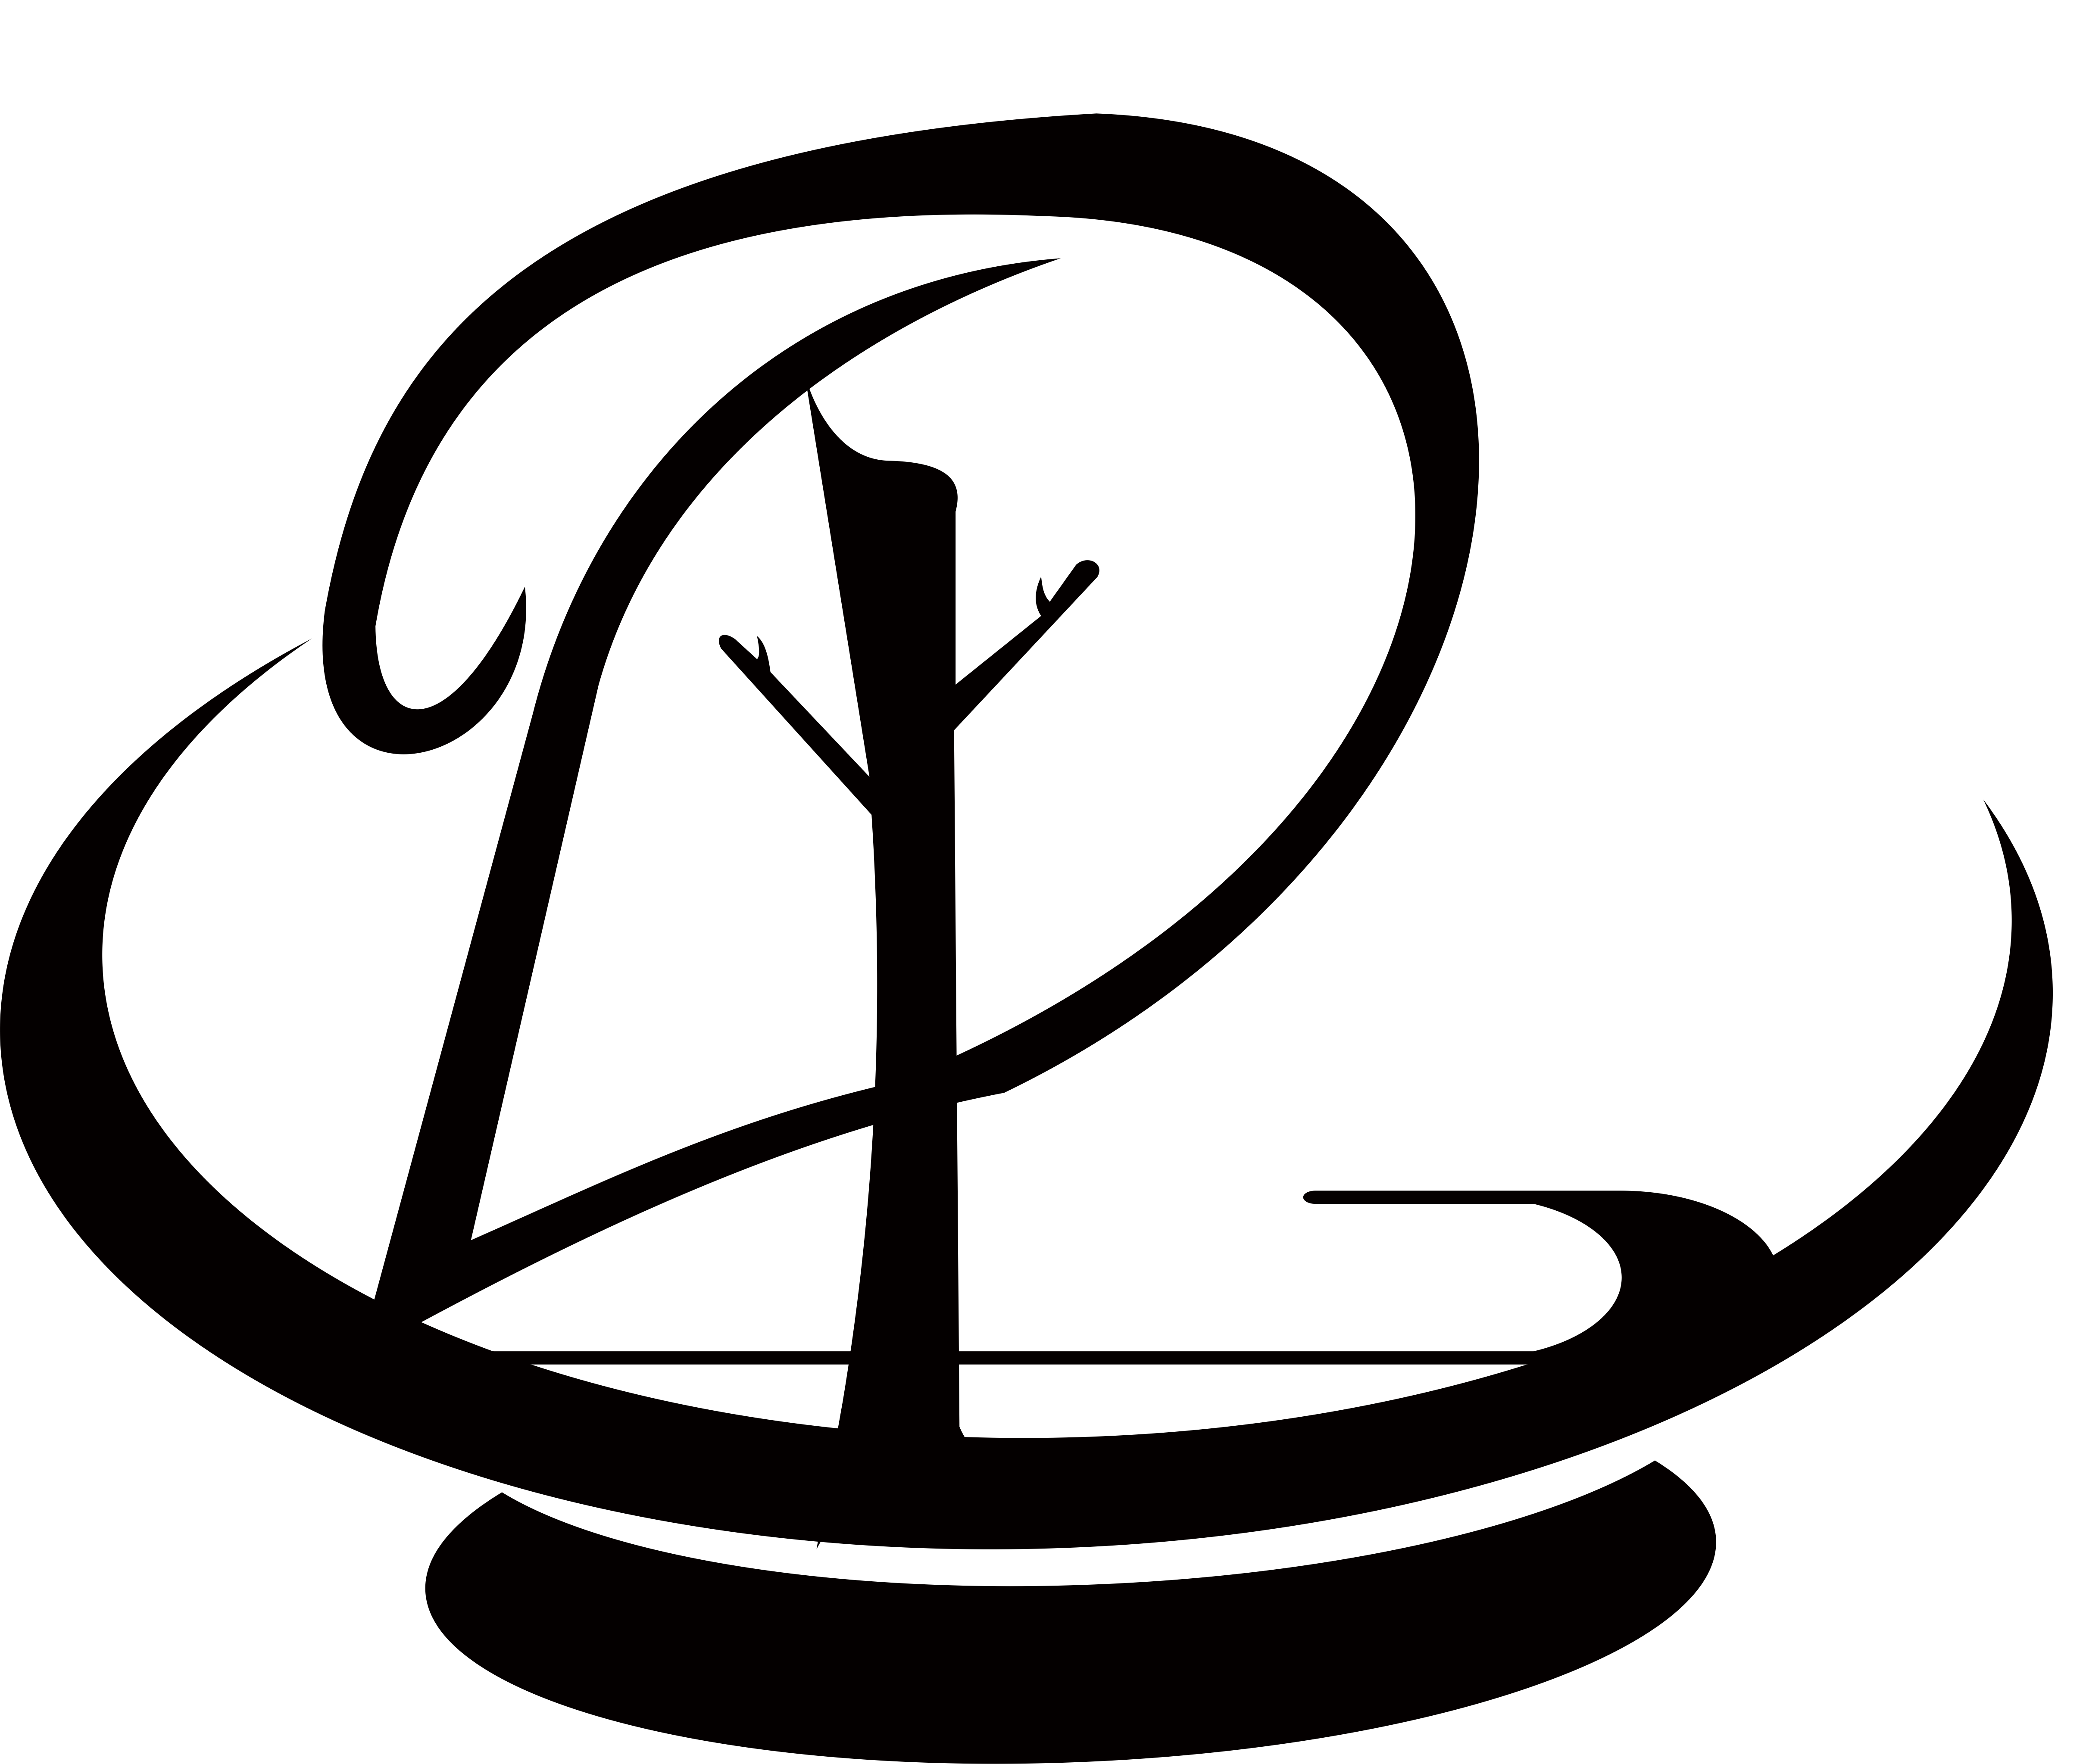 FastCloud Logo